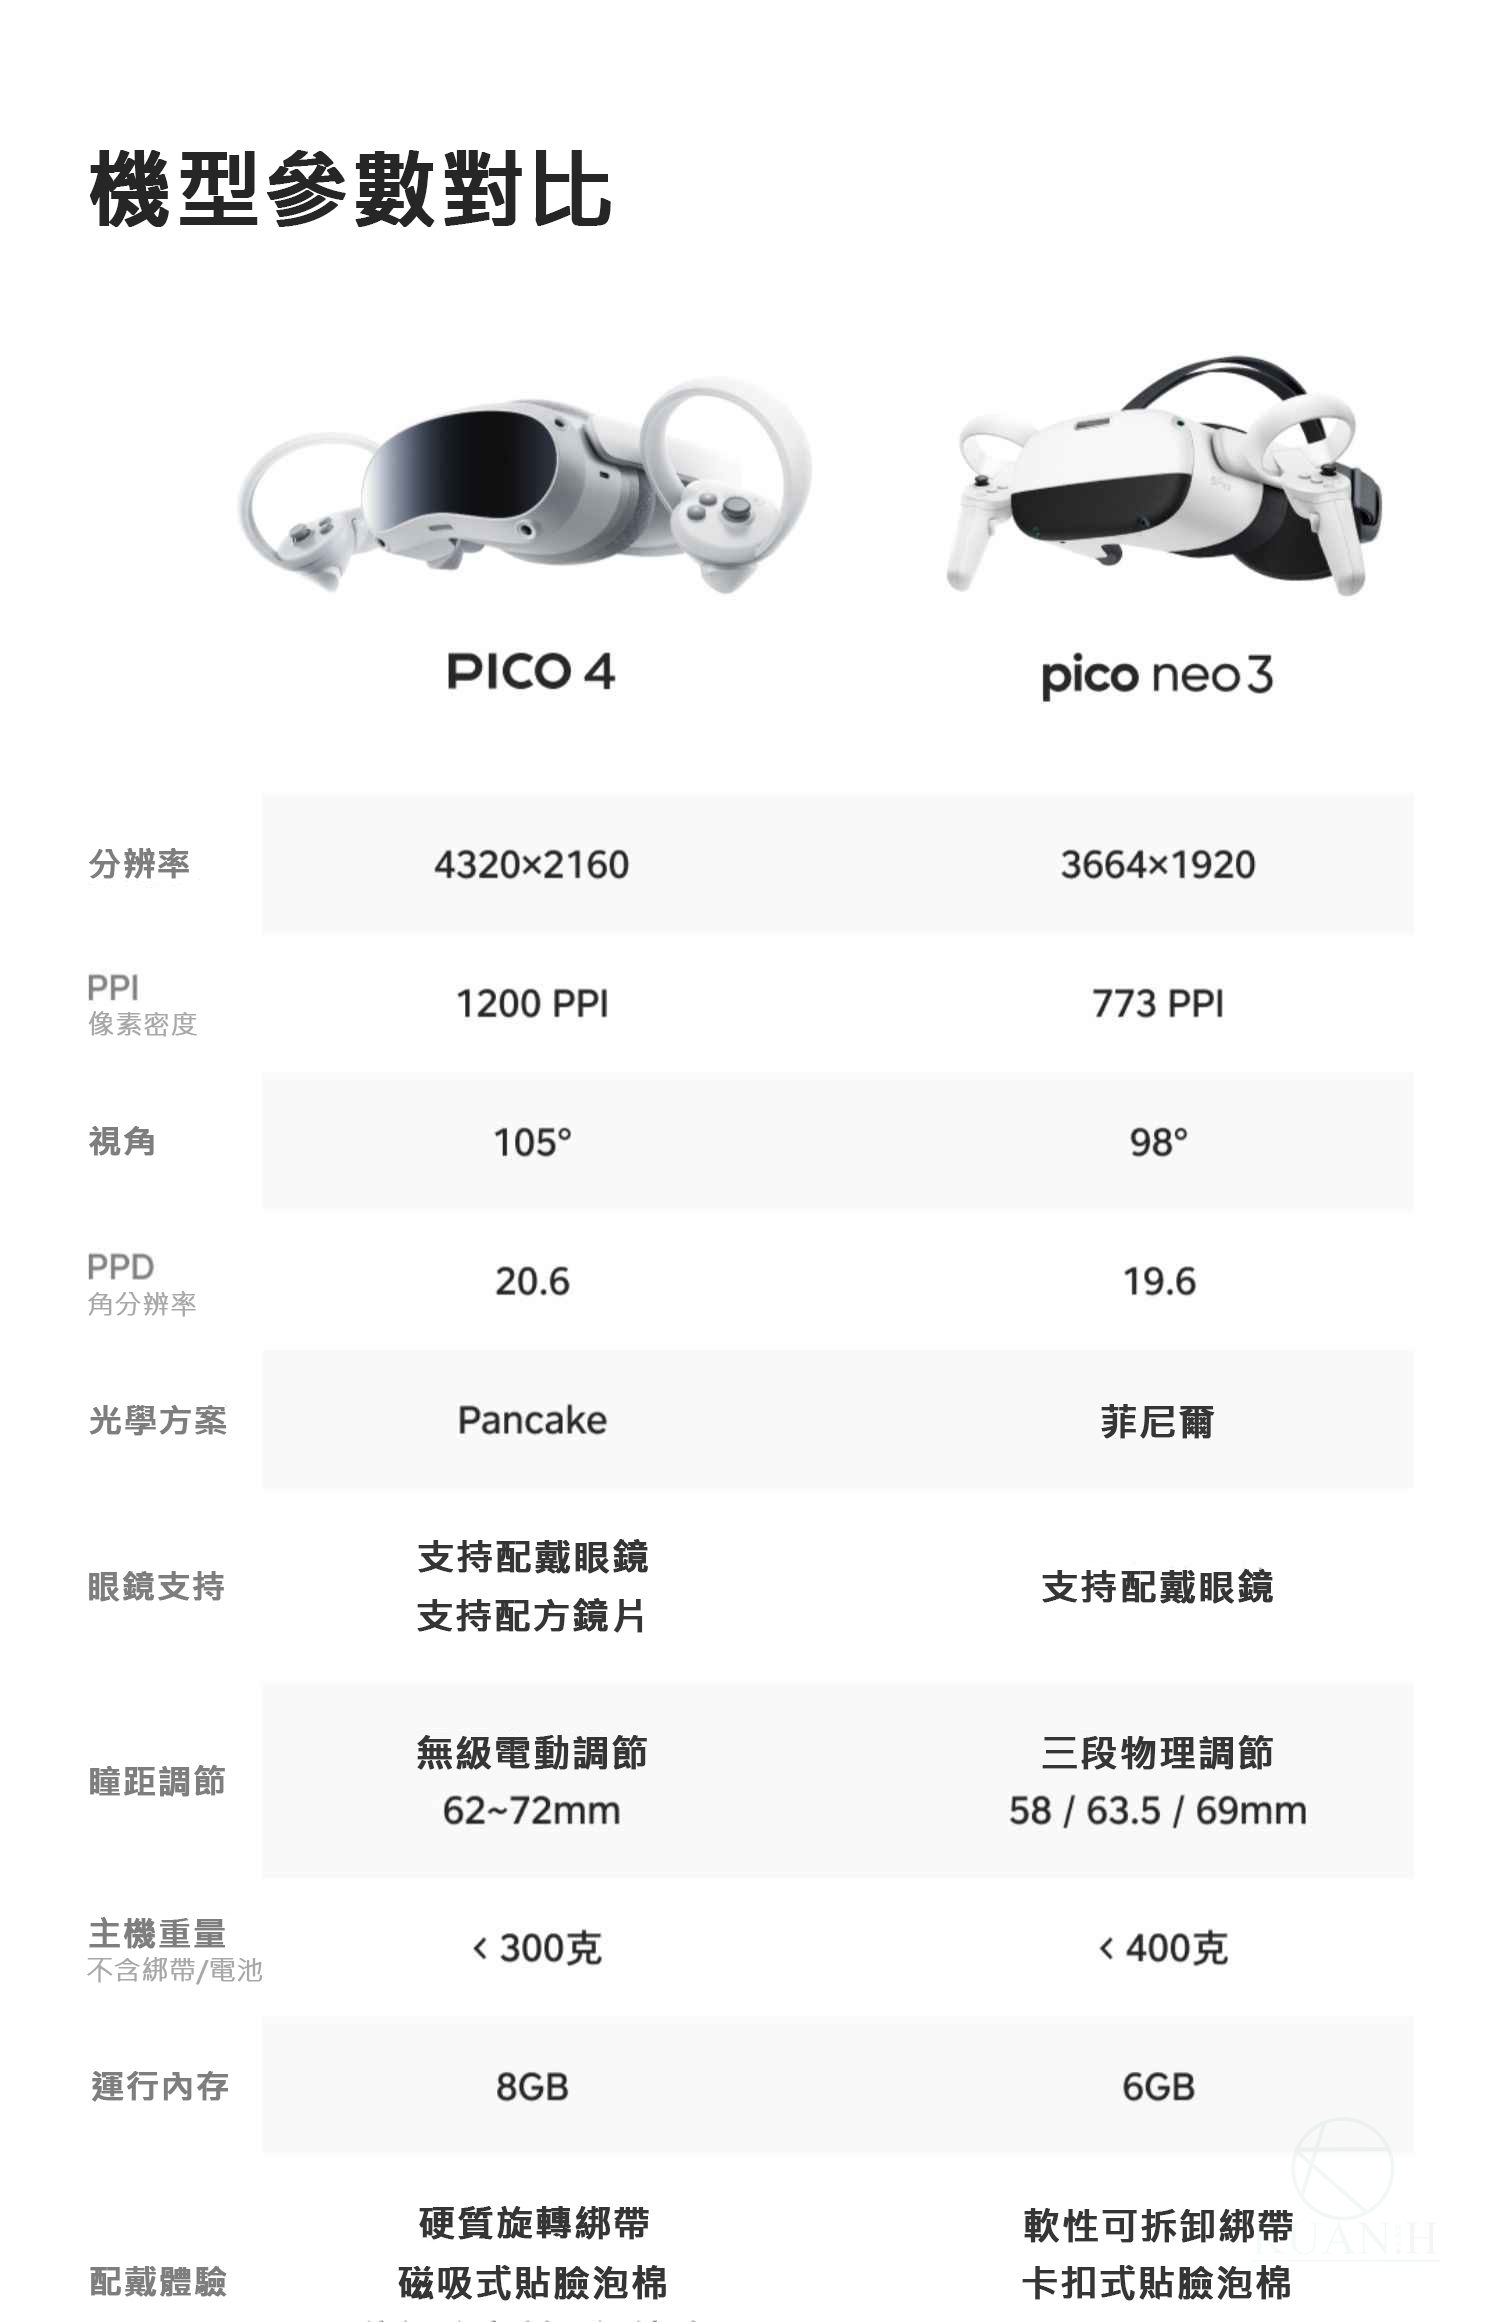 一年保固PICO 4 128G VR 一體機PICO4 VR眼鏡高清3D 無線串流電腦steam